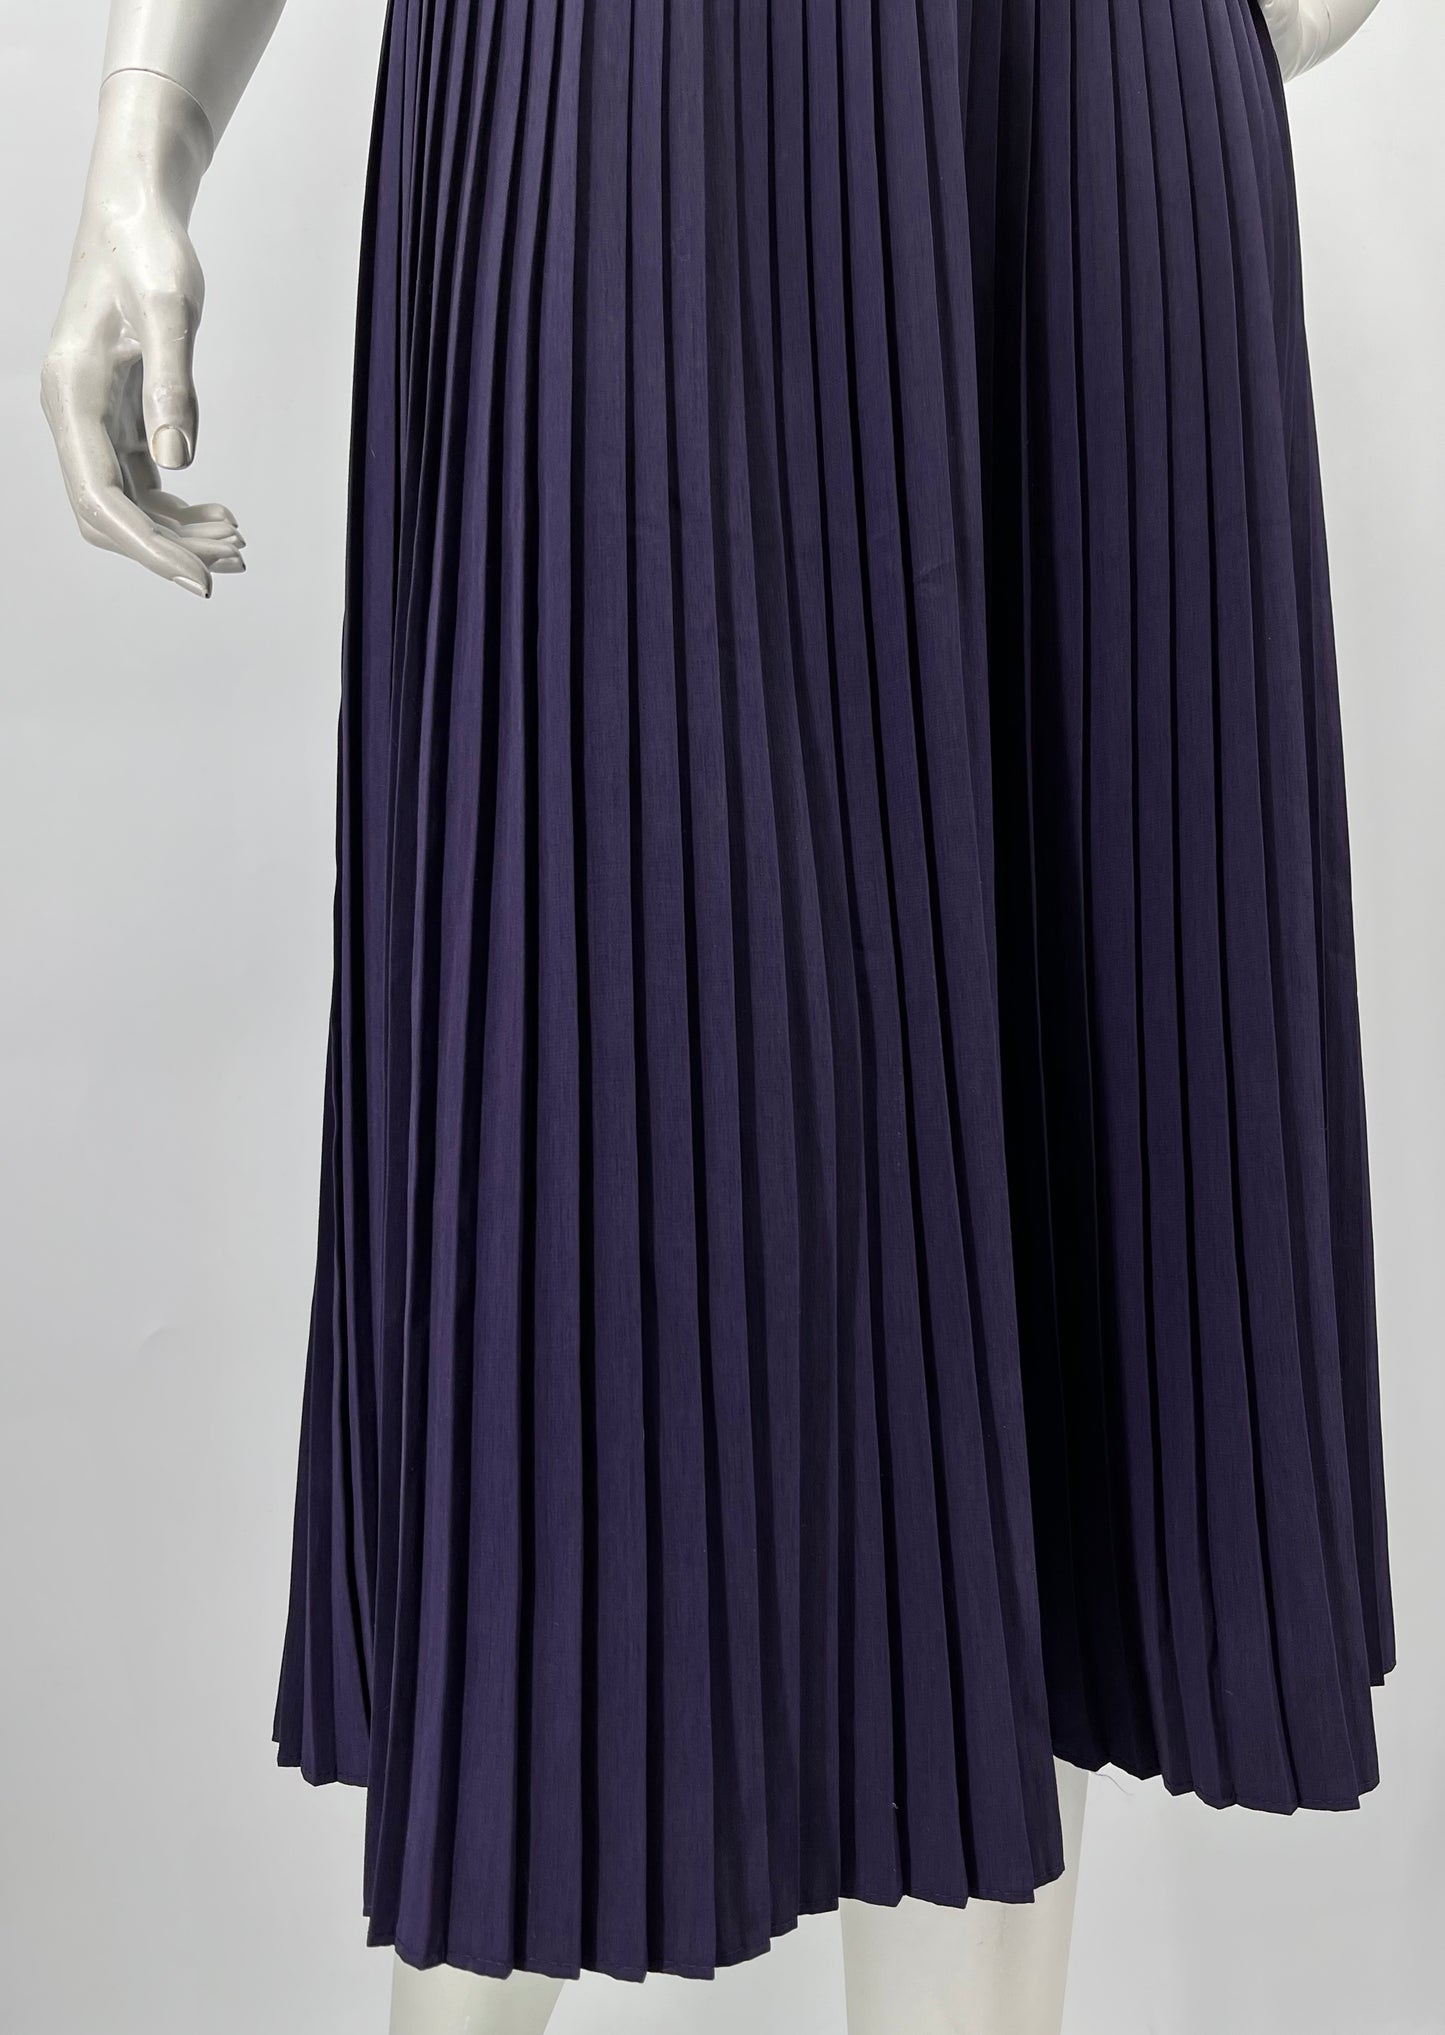 Tummanvioletti pliseerattu hame, 90-luku, vyöt.ymp. 90cm, kokoarvio 44-46